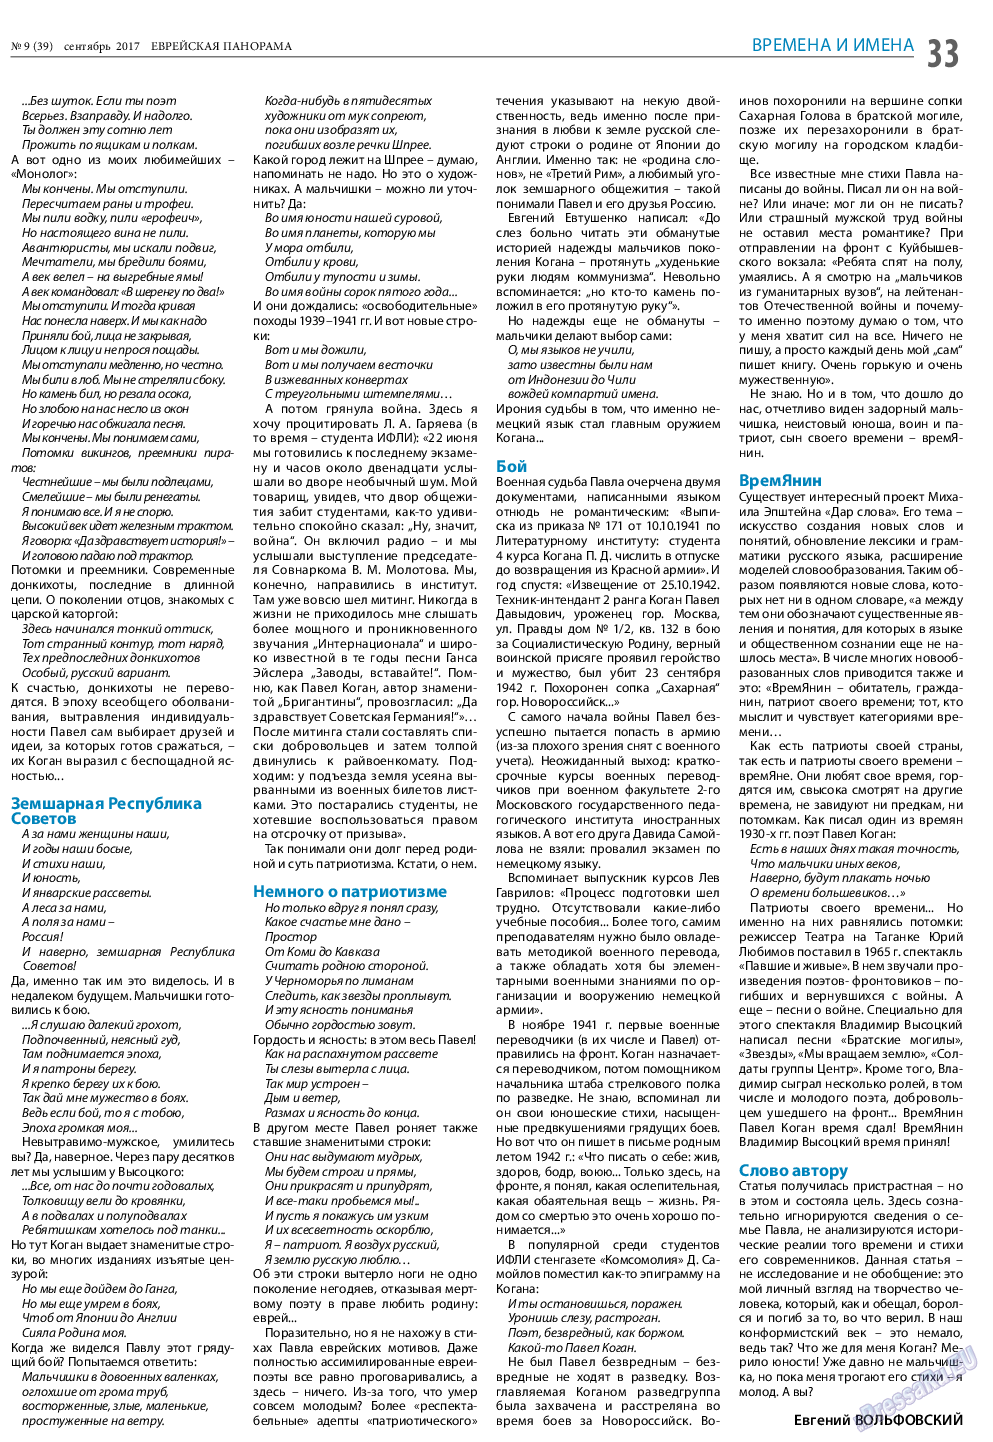 Еврейская панорама, газета. 2017 №9 стр.33